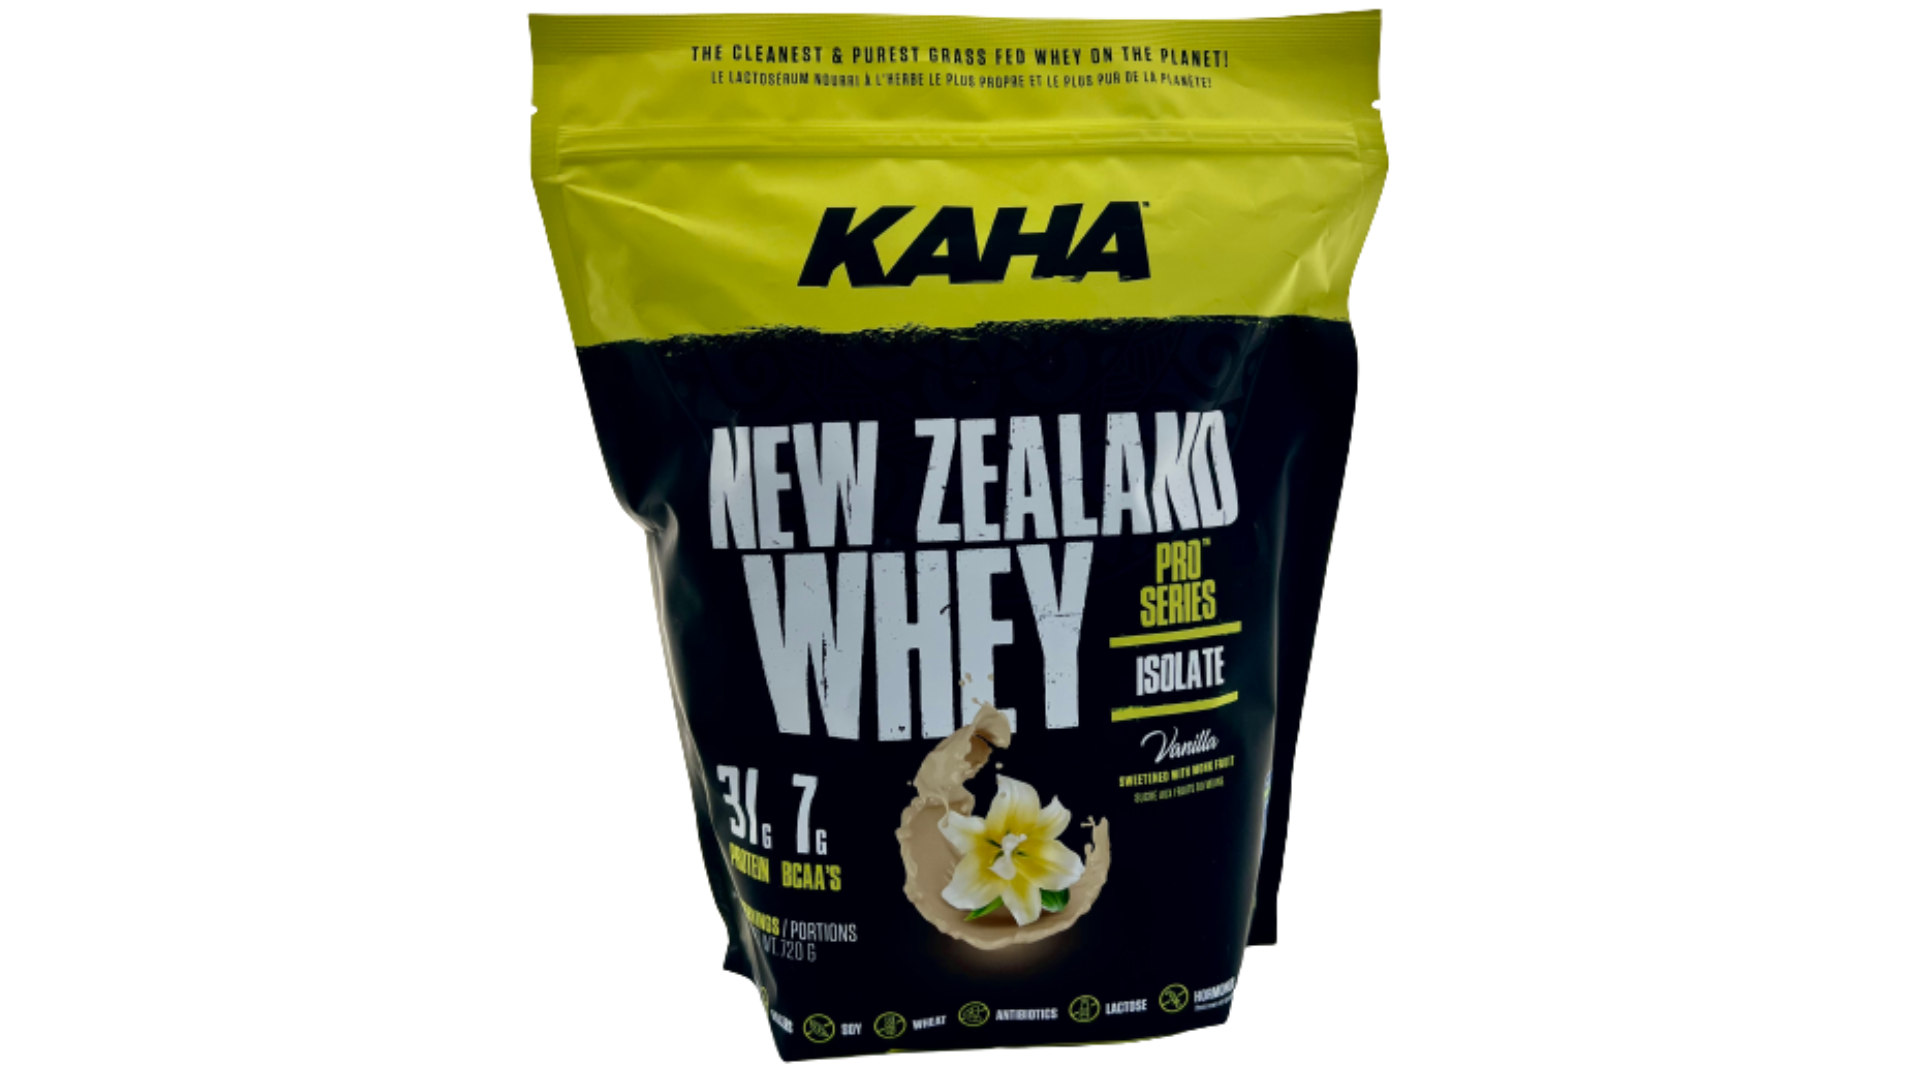 KAHA New Zealand Whey Isolate Protein